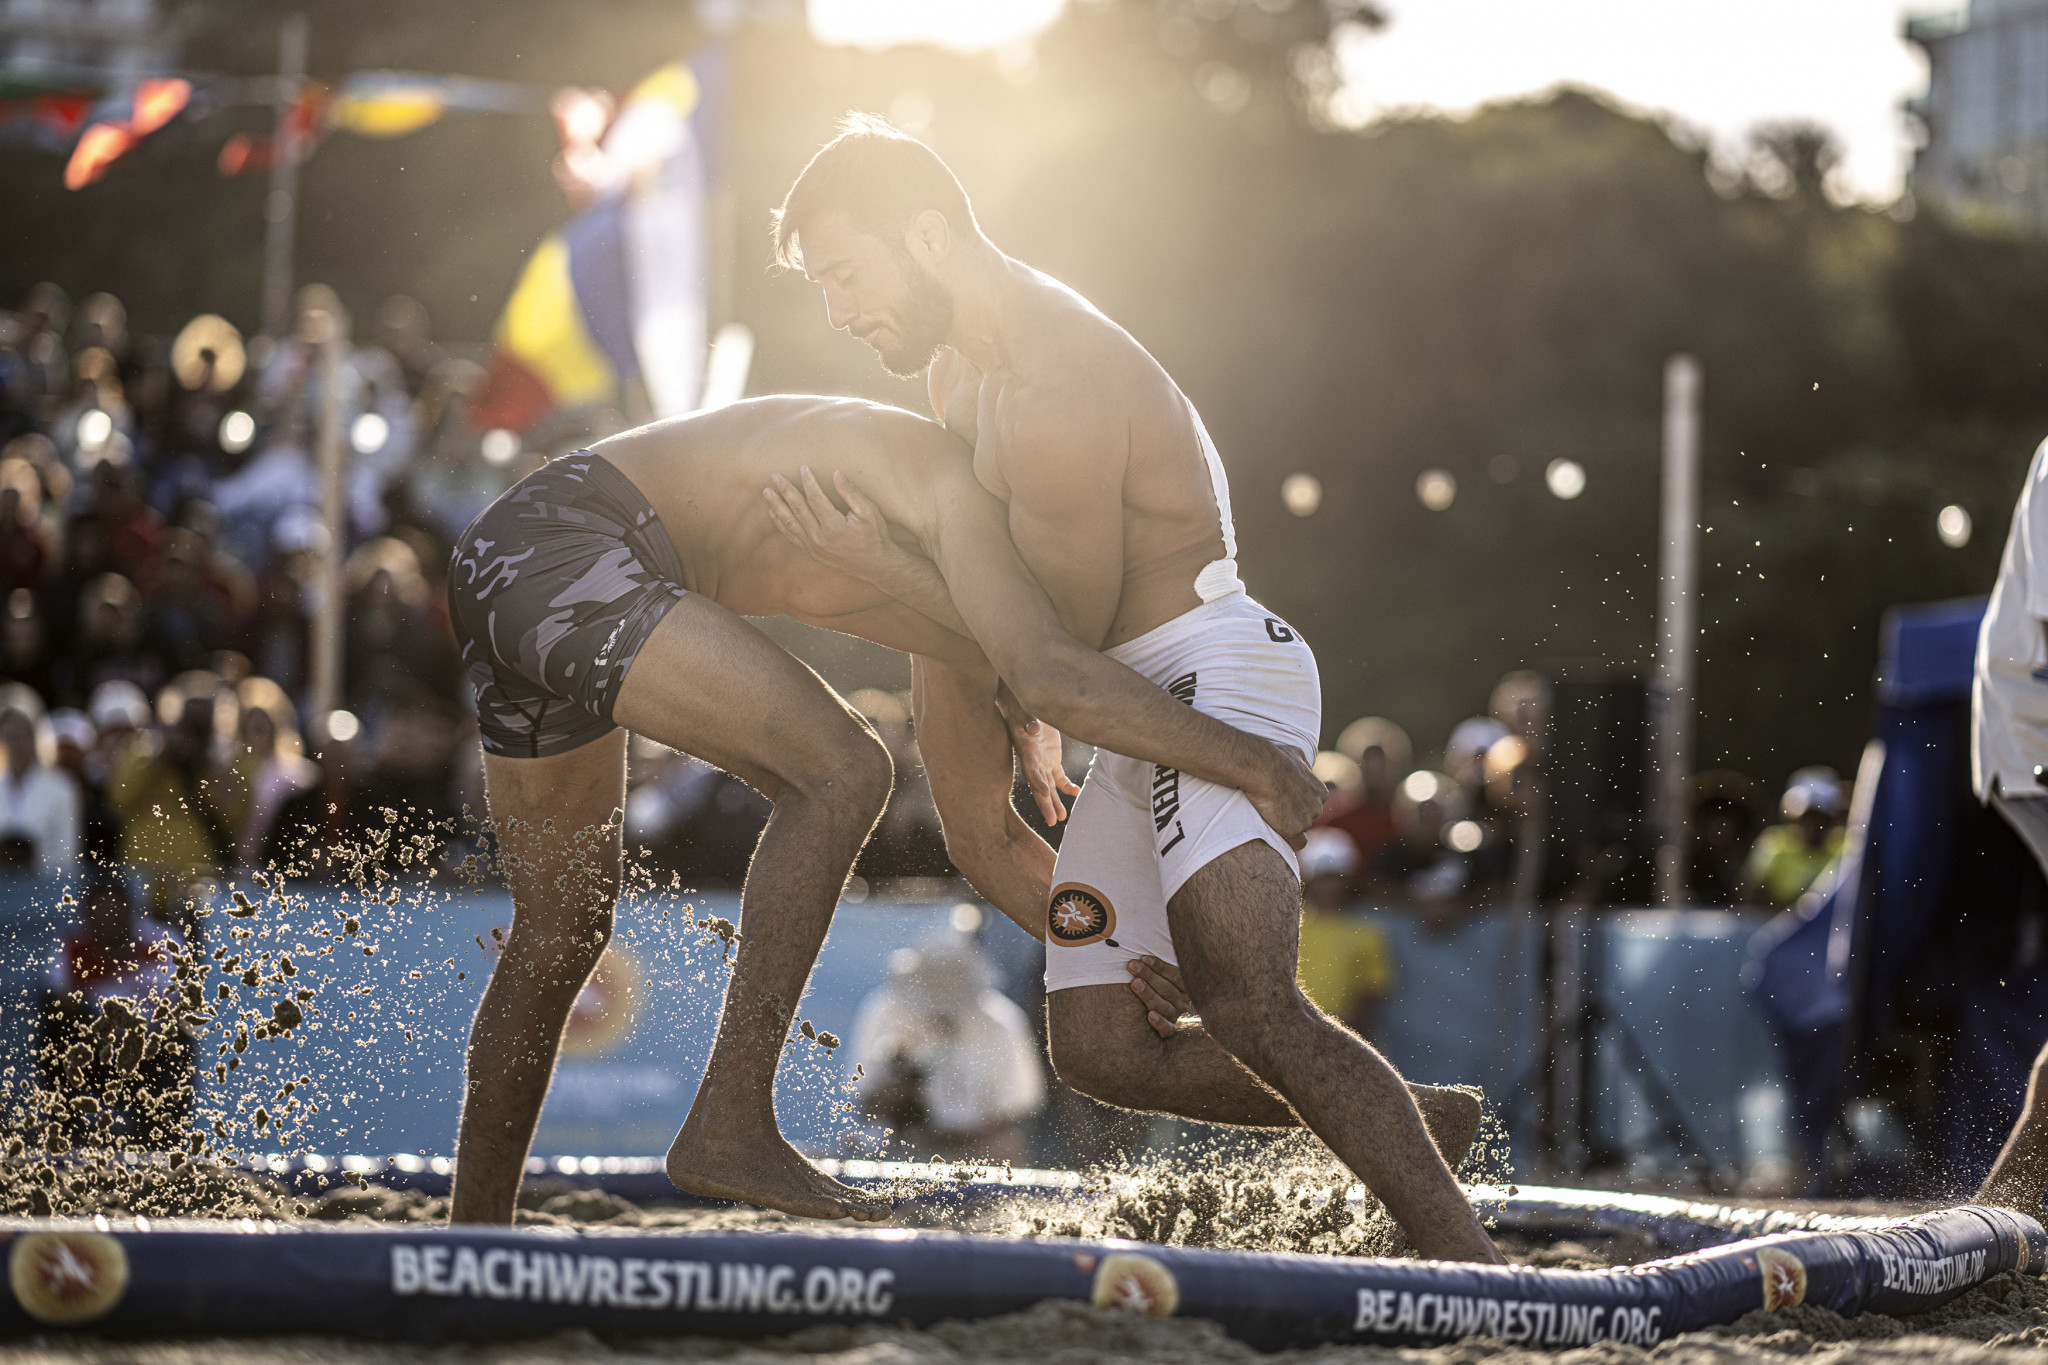 Levan Kelekhsashvili, right, defeated Ramiz Hasanov to win a third consecutive Beach Wrestling World Series event ©Getty Images